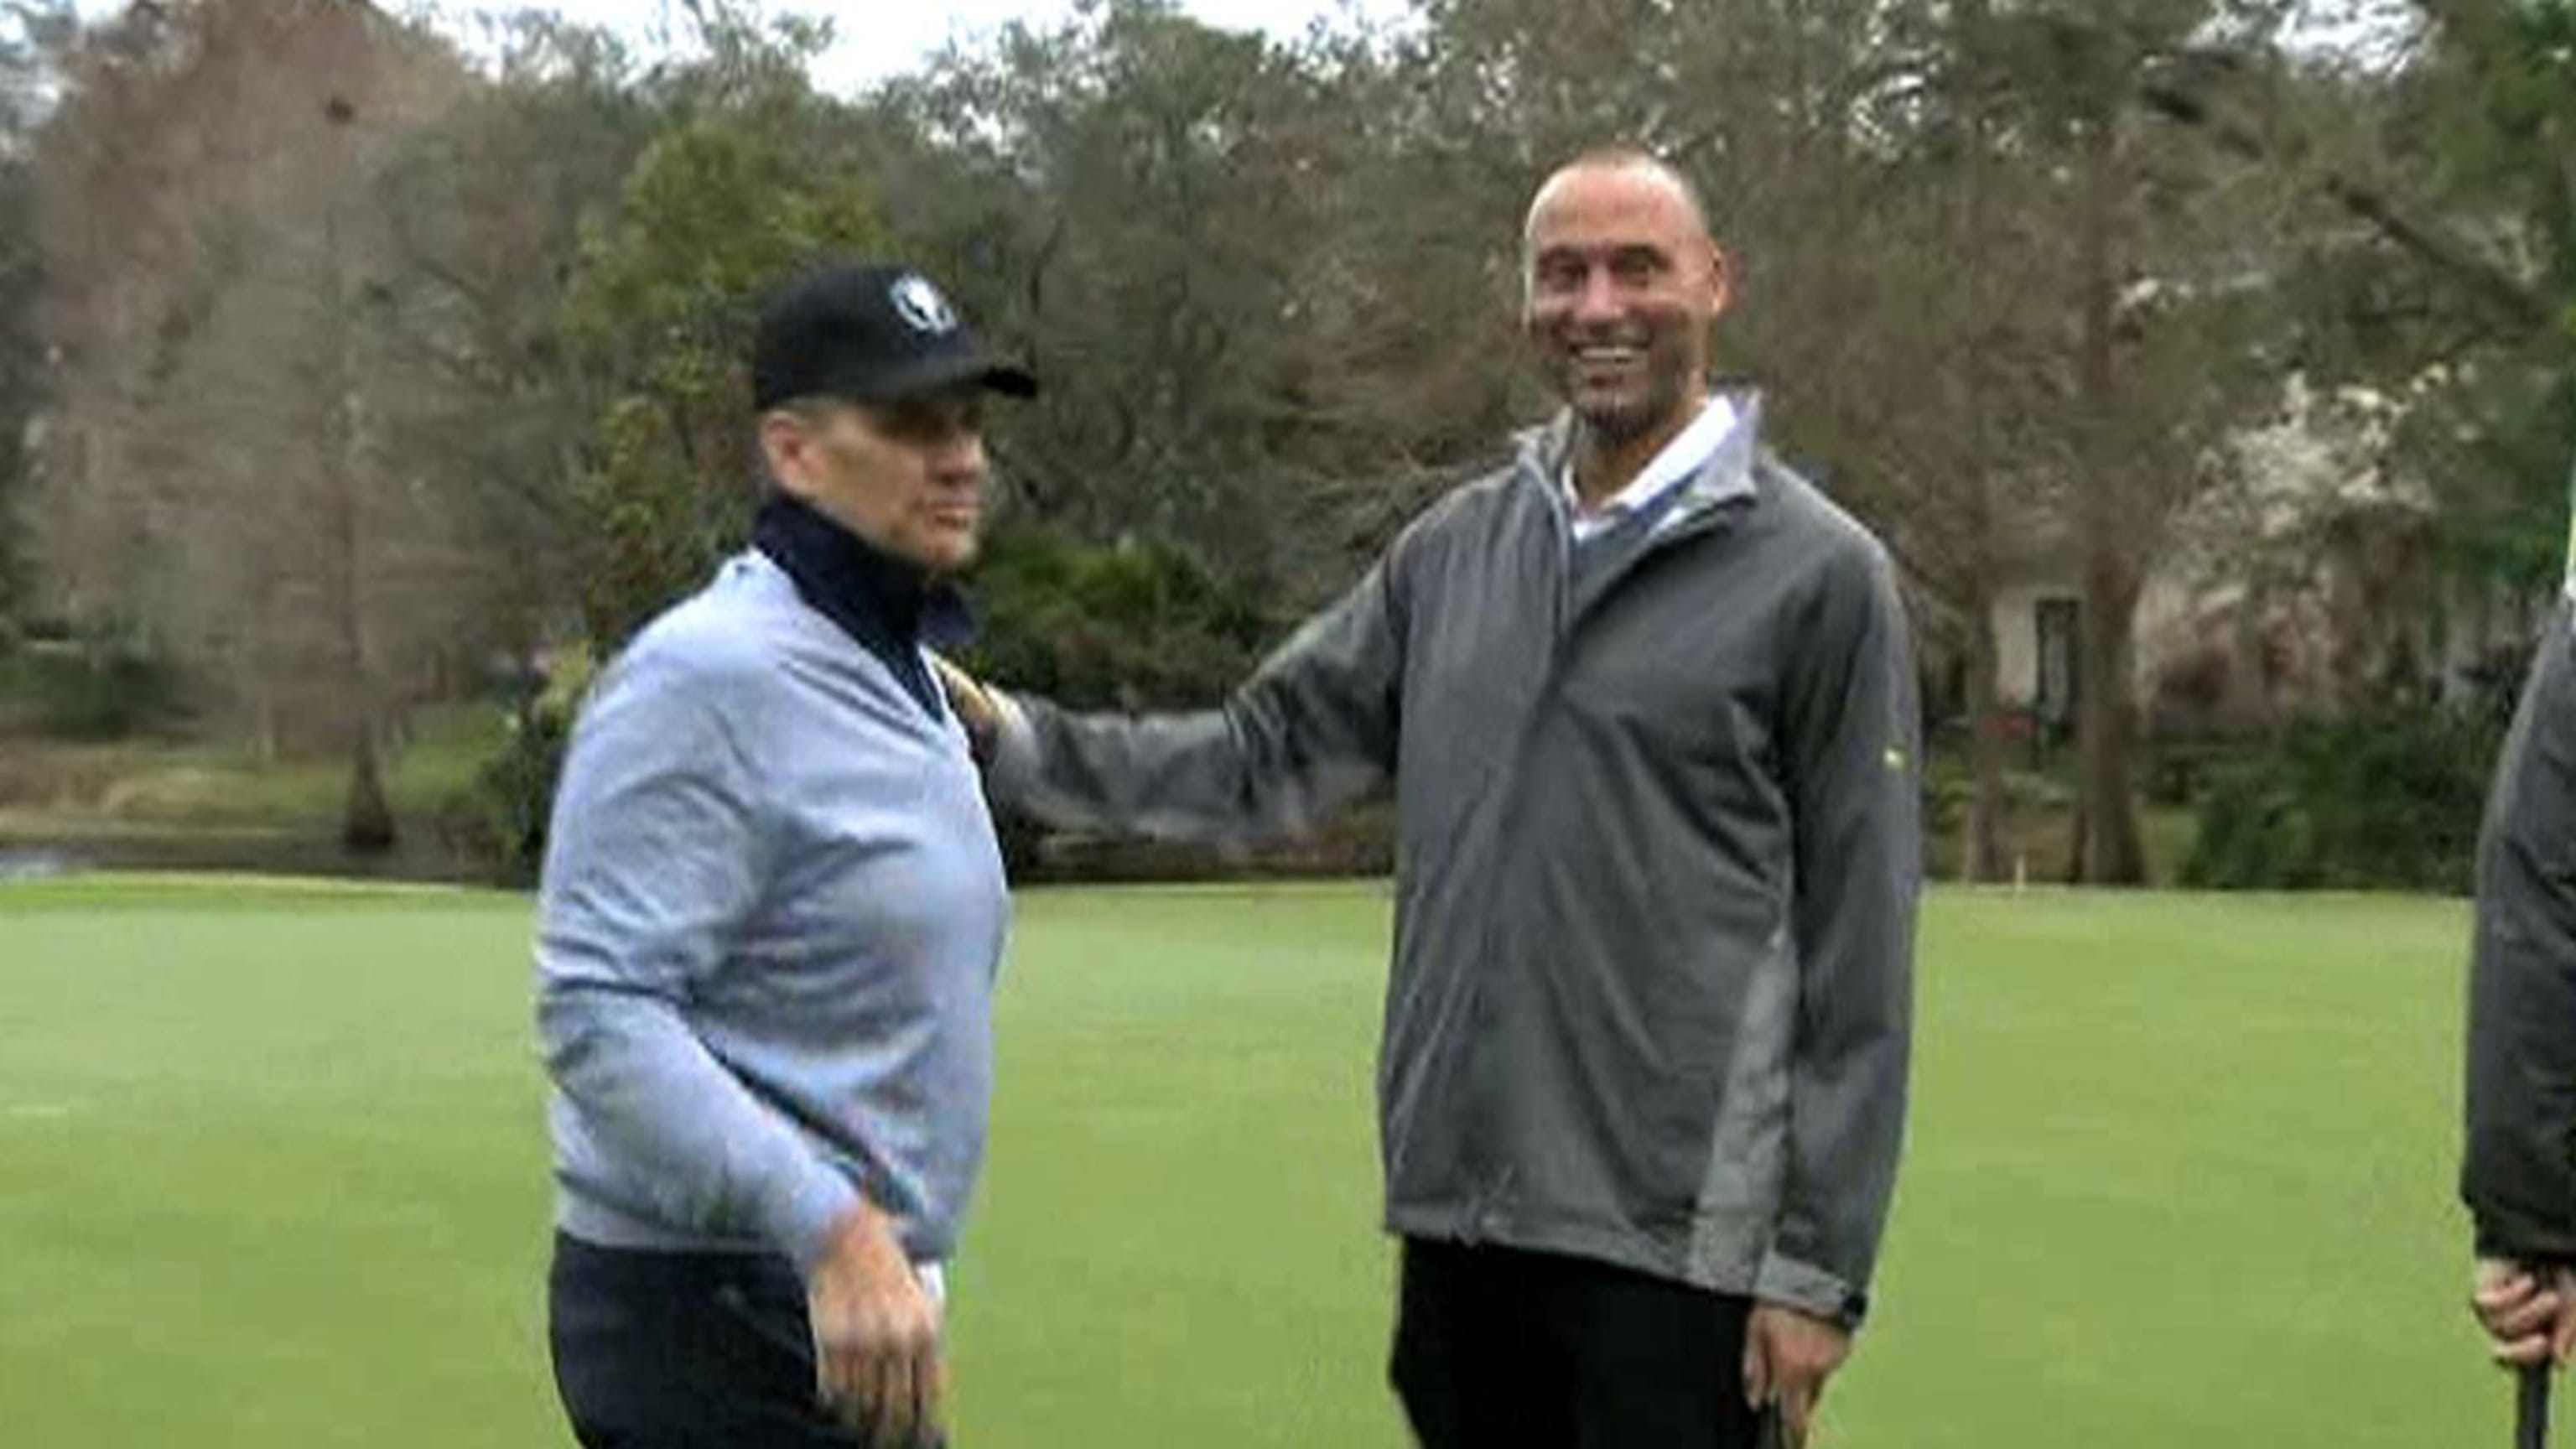 Derek Jeter hosts celebrity invitational golf tournament at Baha Mar